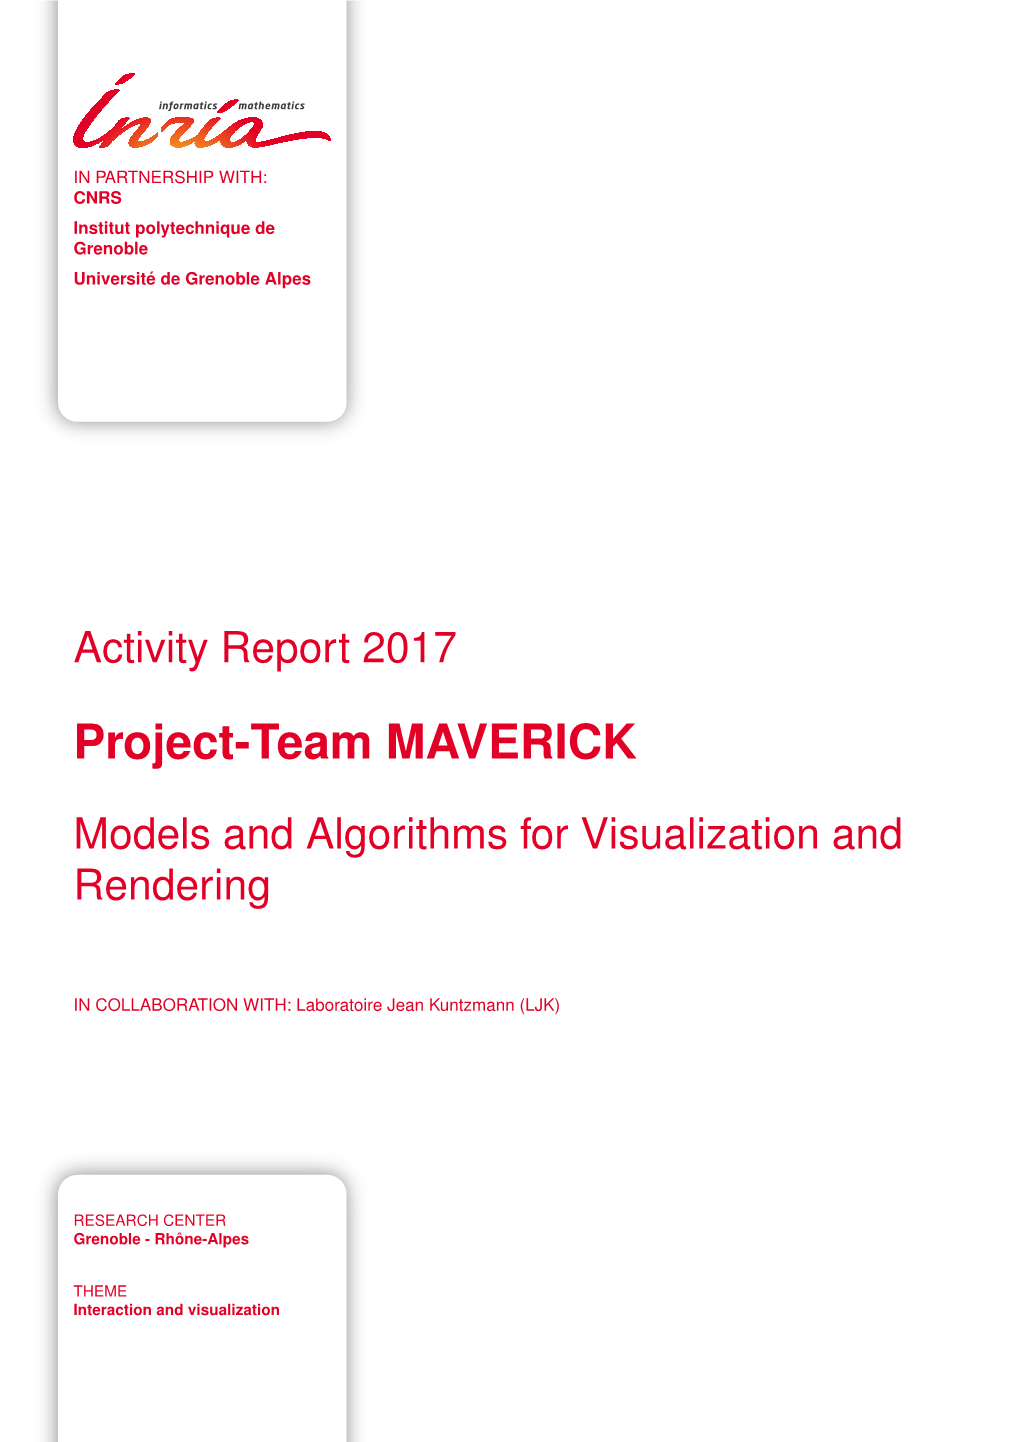 Project-Team MAVERICK